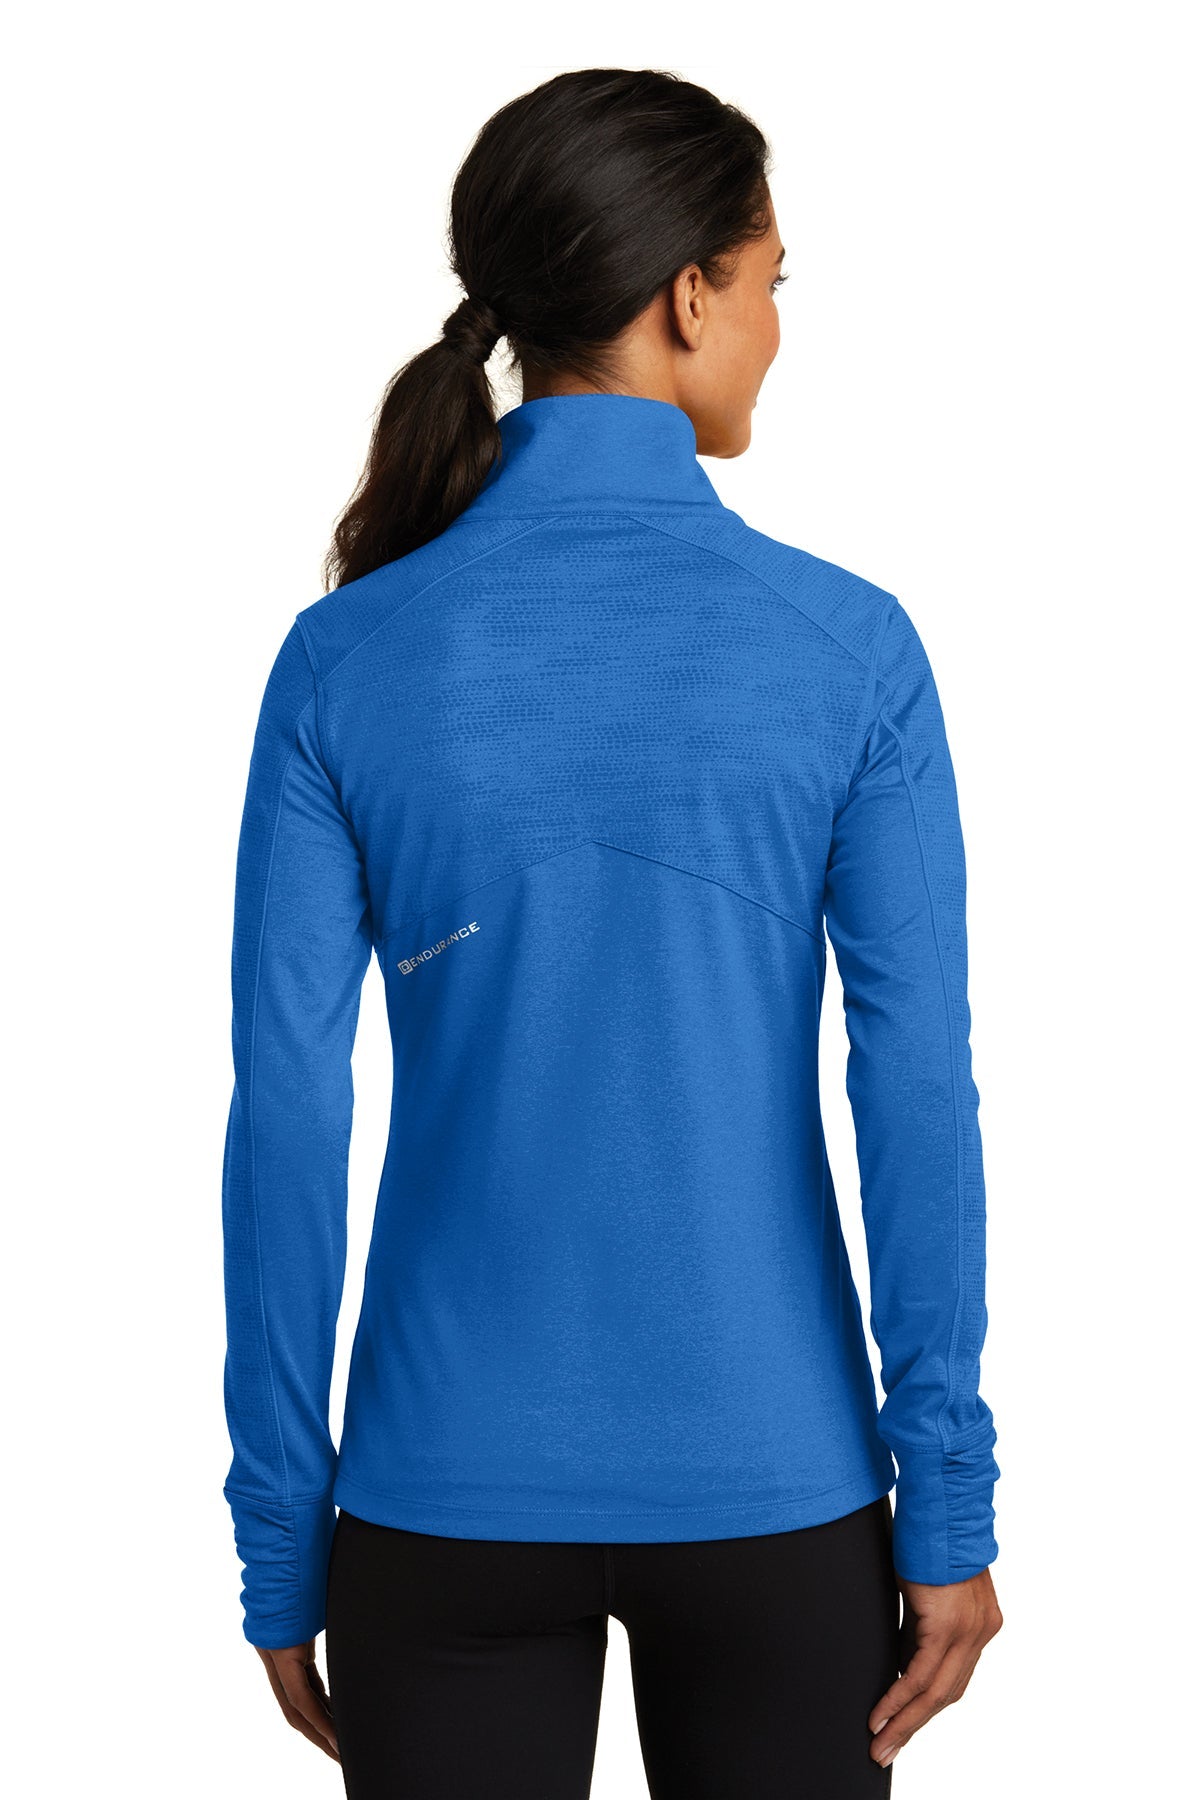 ogio endurance_loe702 _electric blue heather_company_logo_jackets